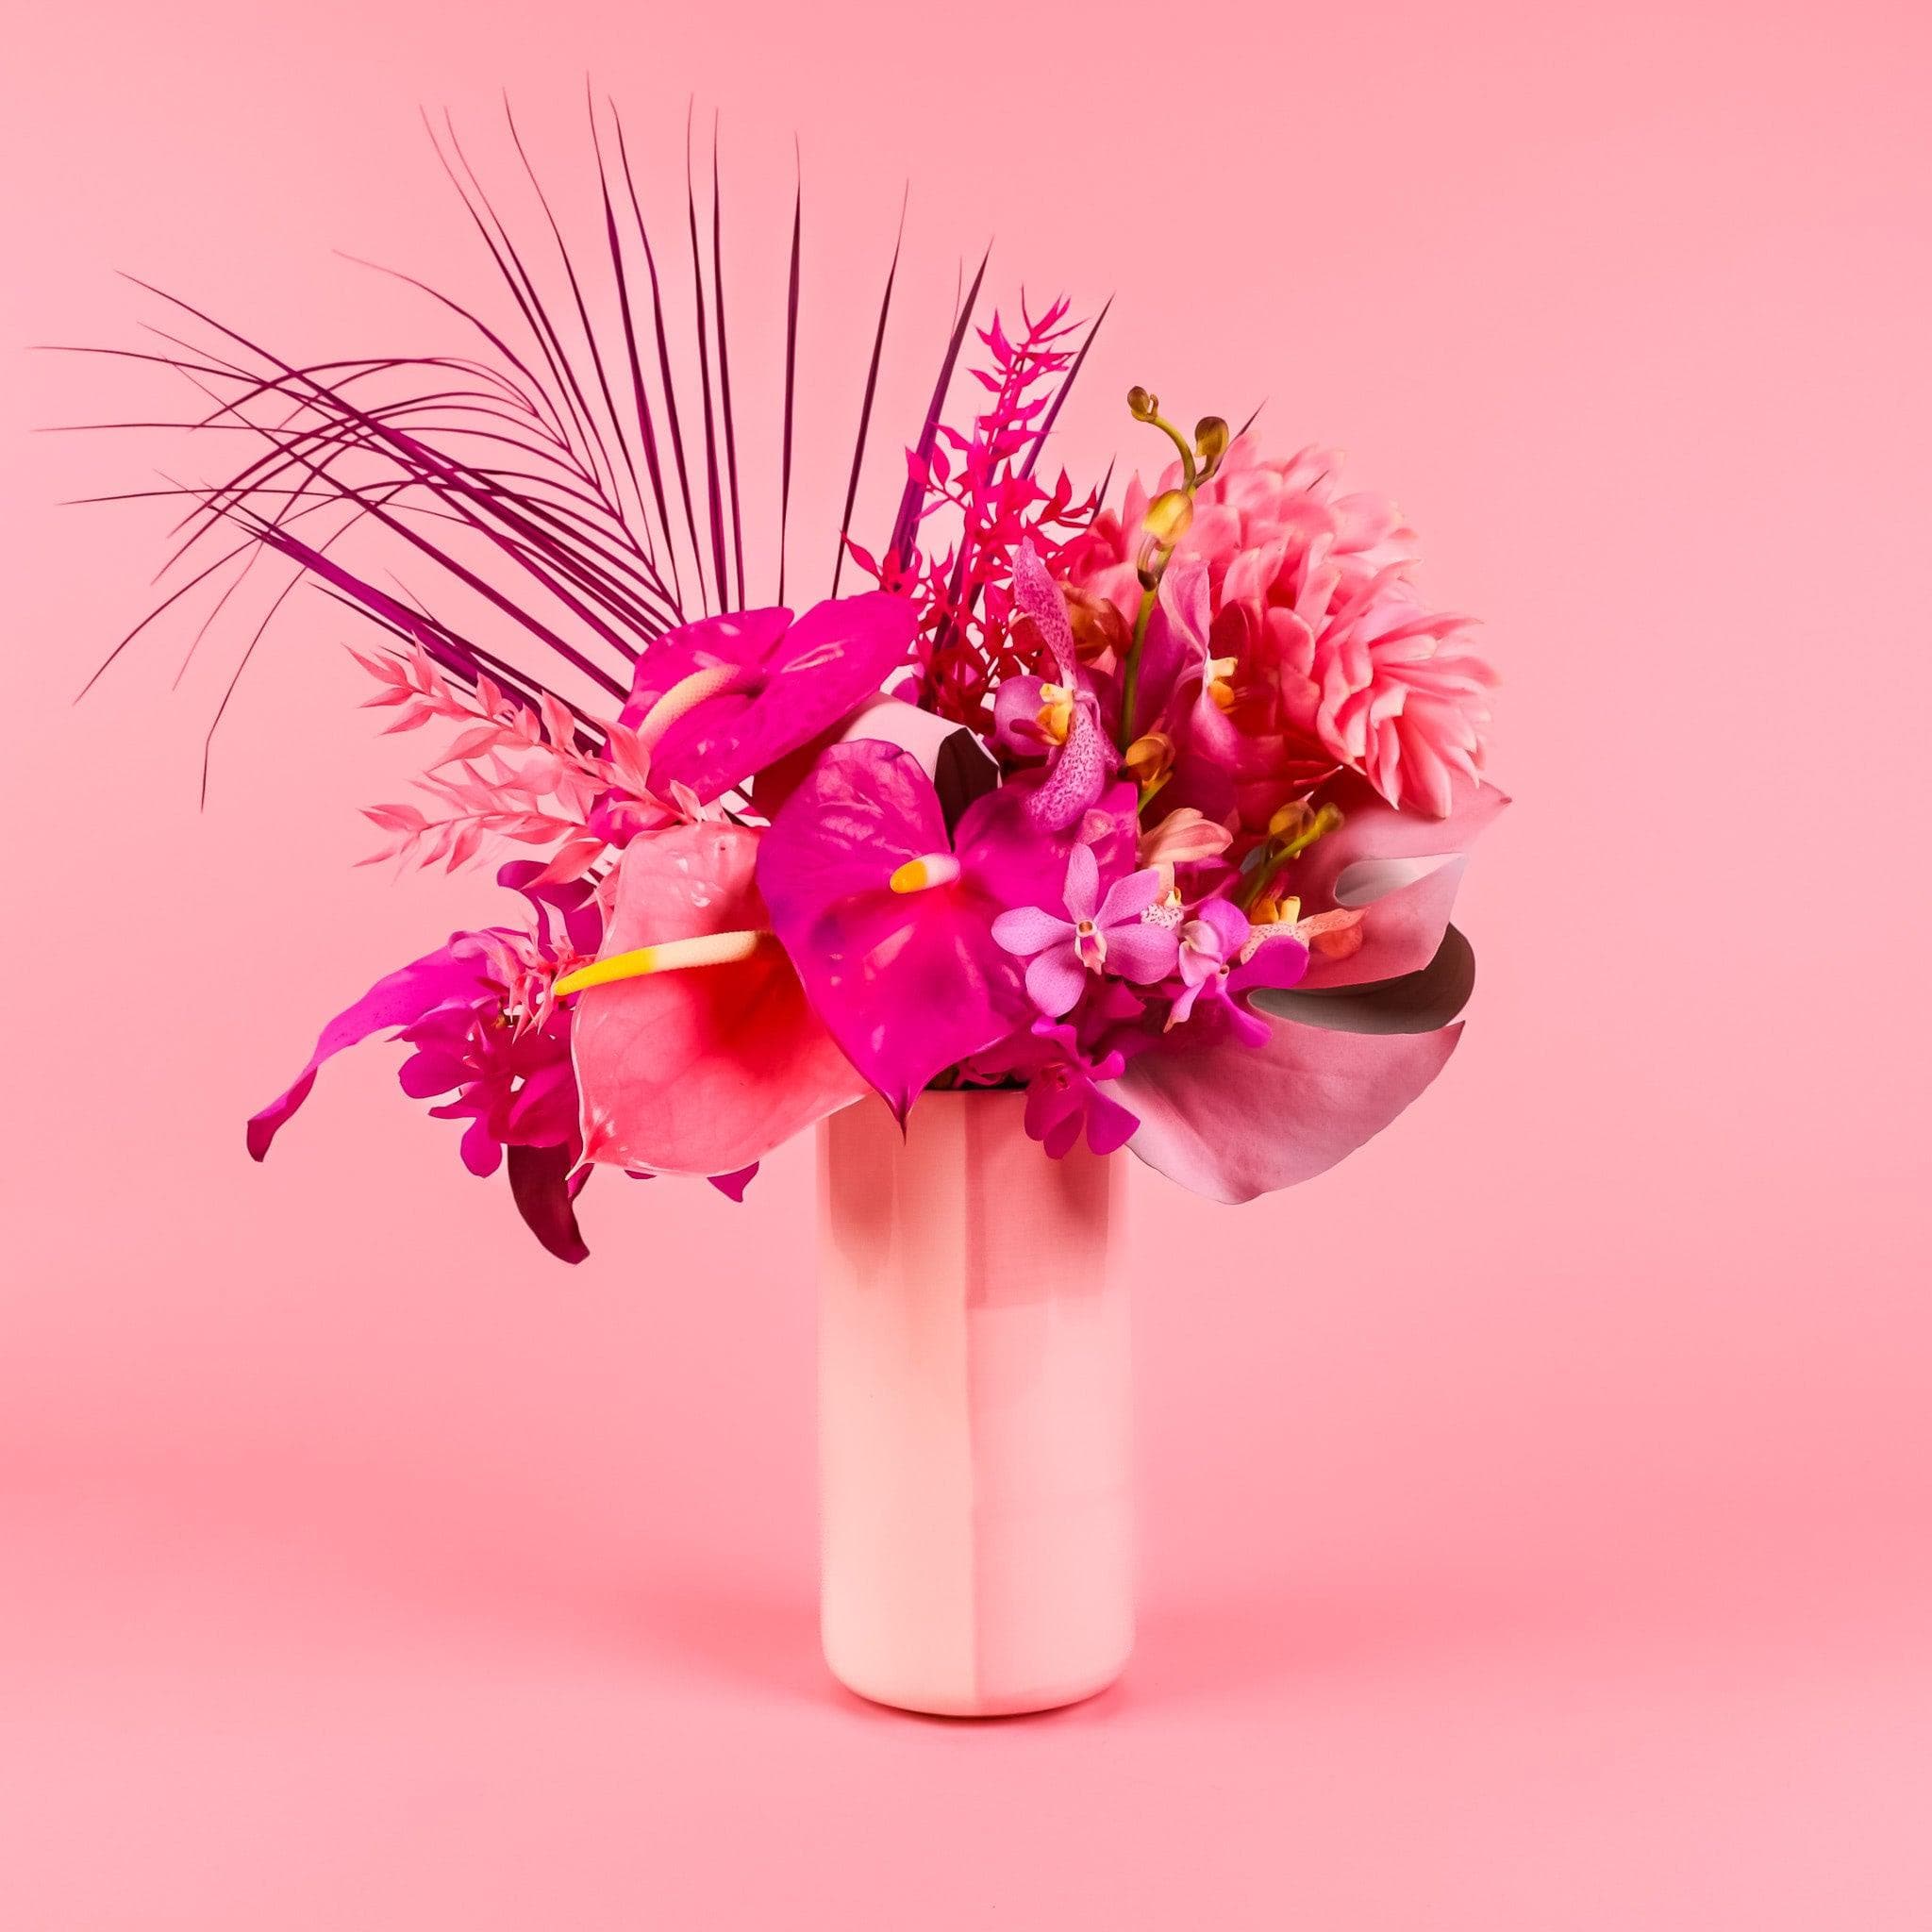 Shop Malibu Pink Floral online from Green Fresh Florals + Plants